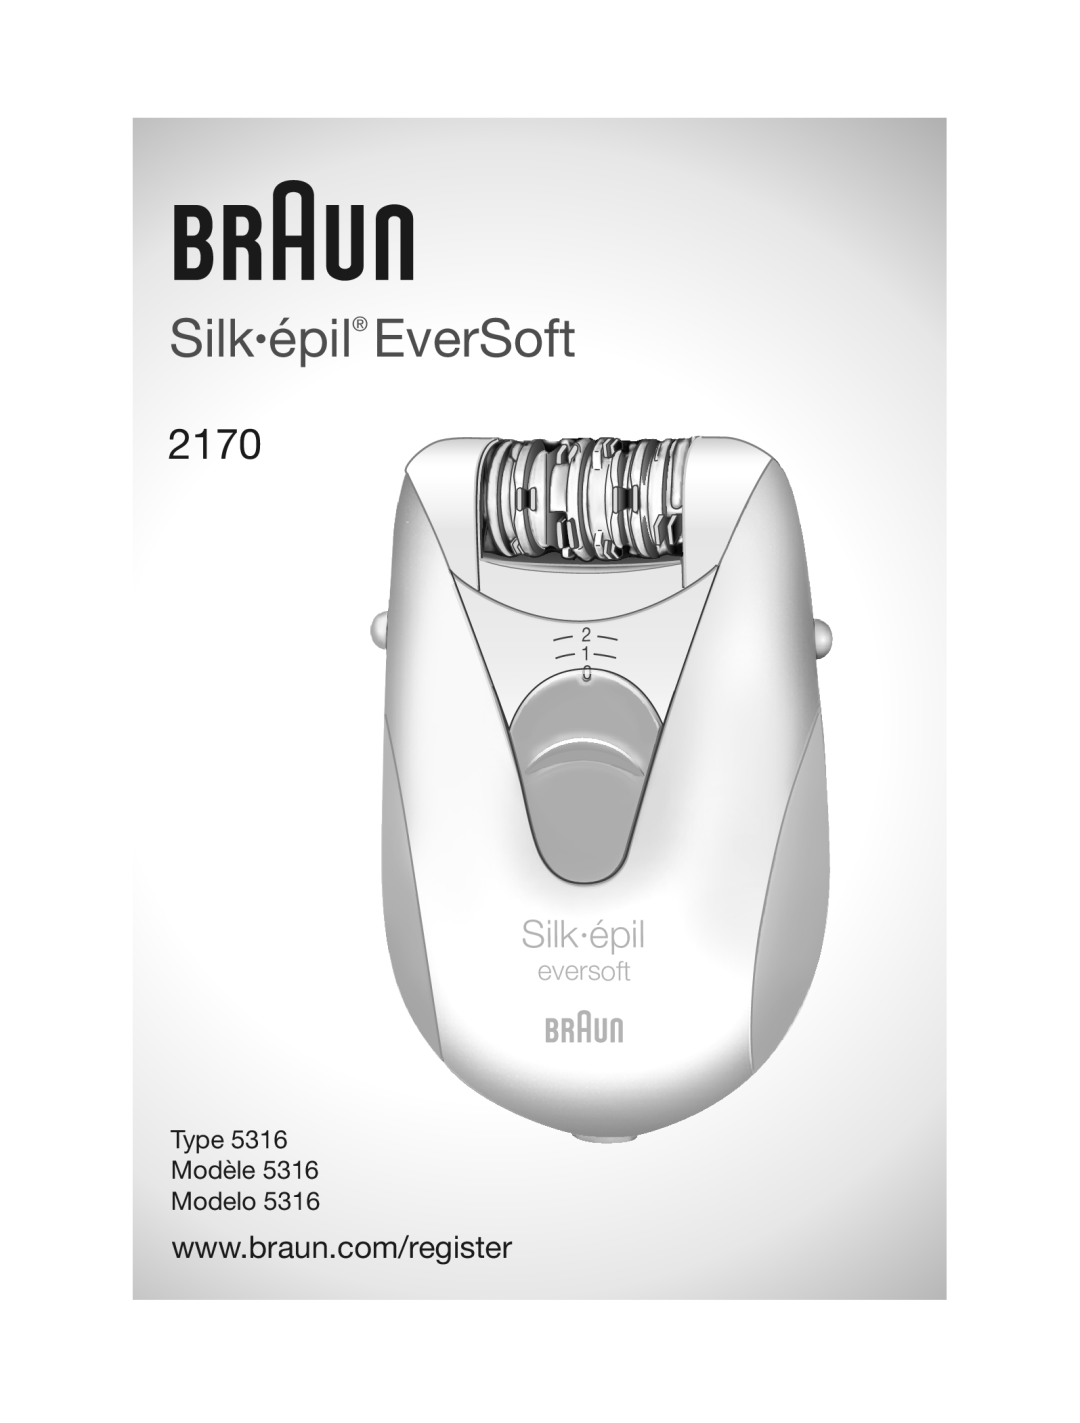 Braun 5316 manual Silk épil EverSoft, 2170, Silk·épil, eversoft, Type Modèle Modelo 